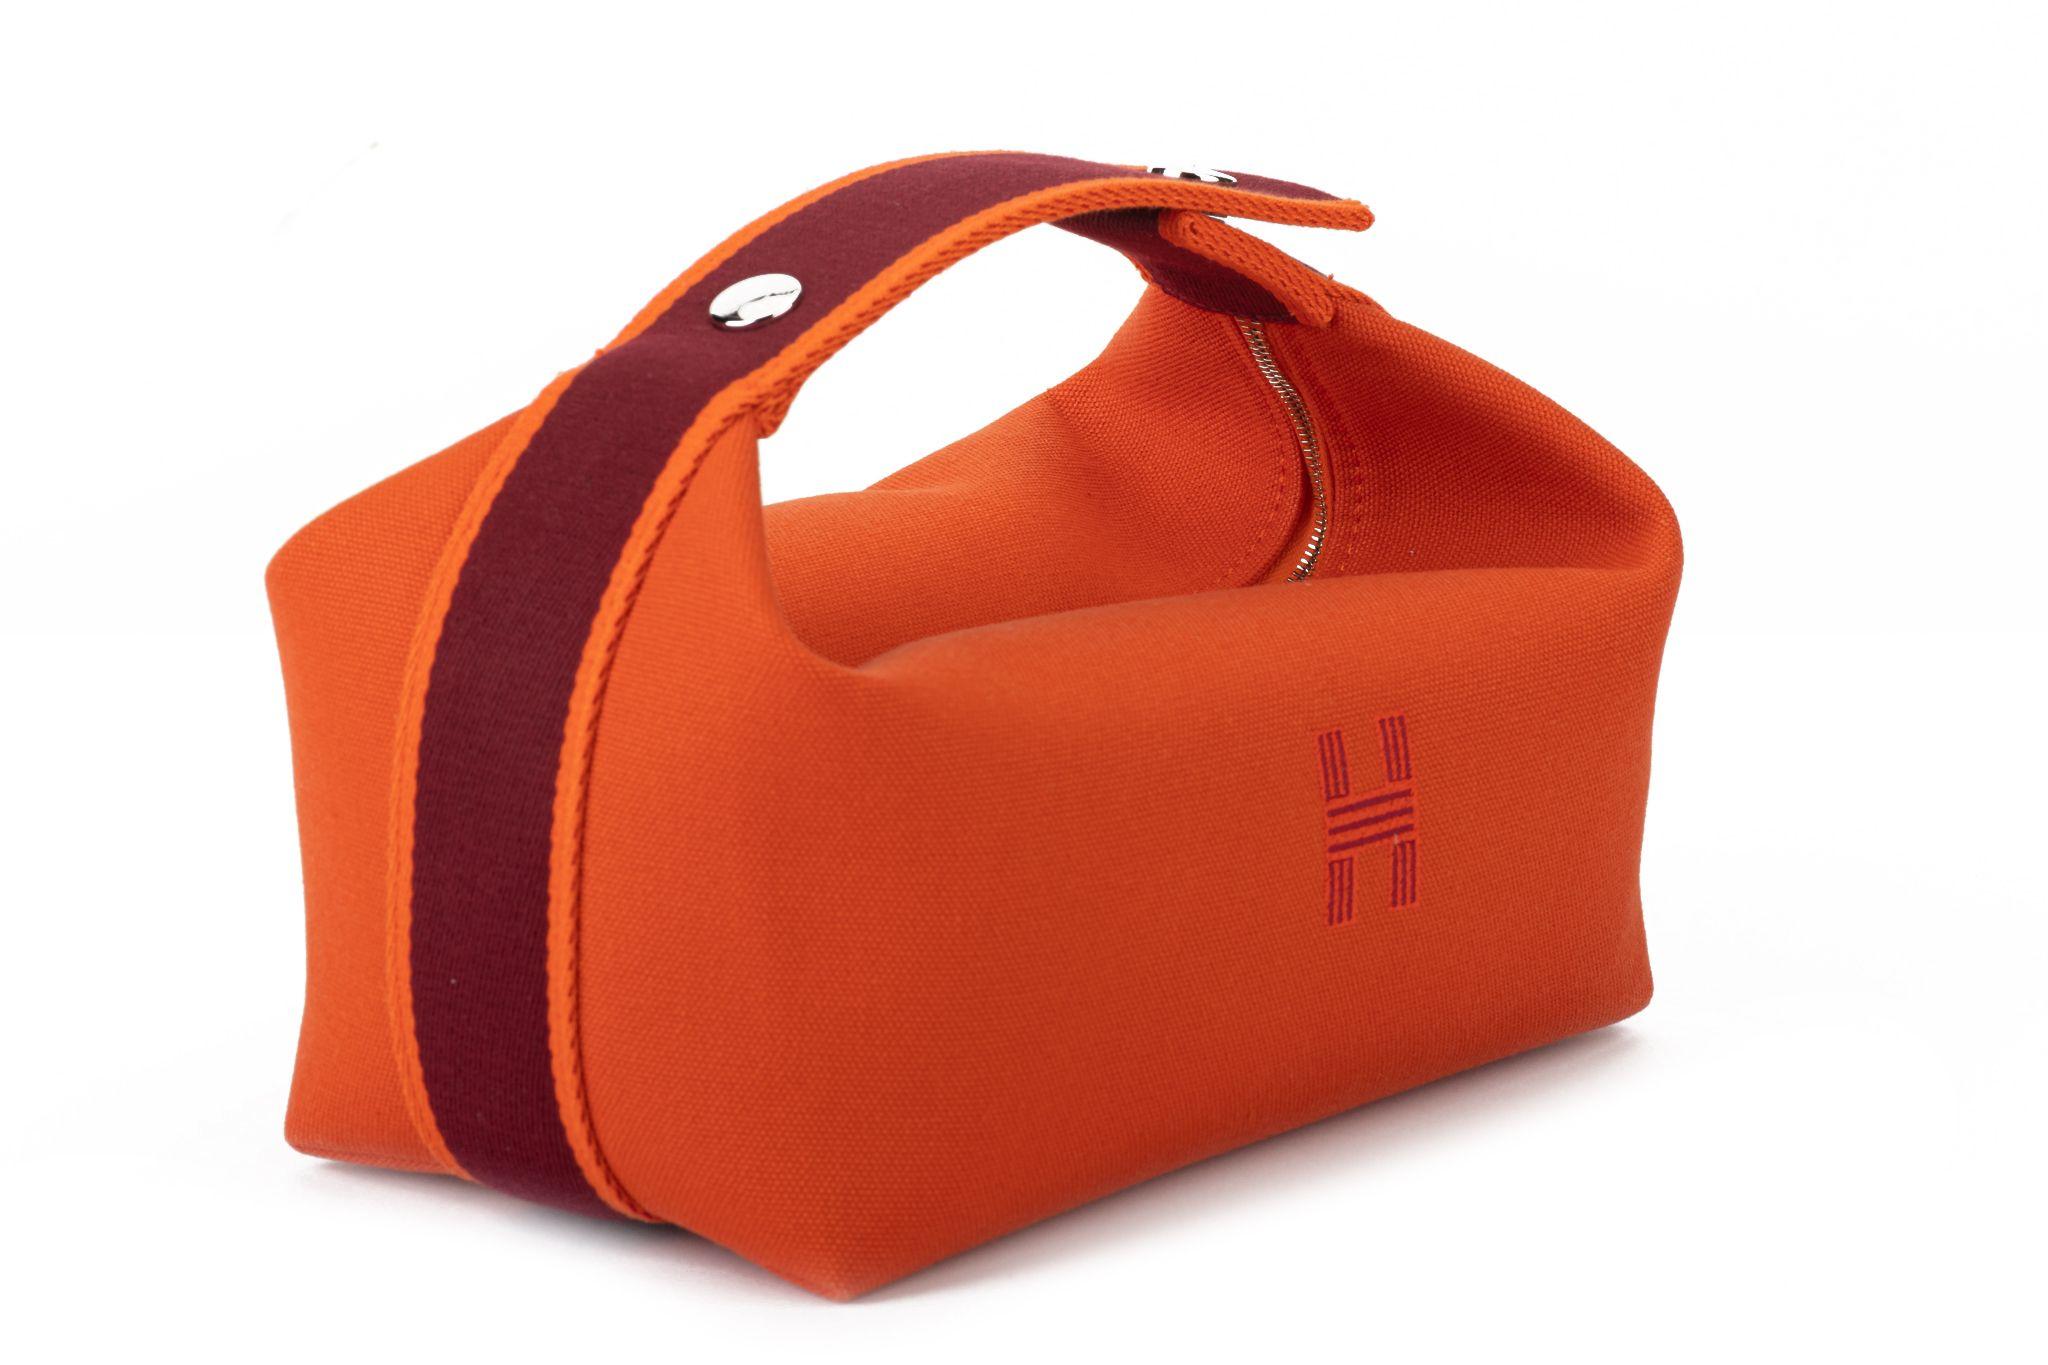 Hermès new orange bride-a-brac Tavel toile case. Comes with original dust cover and box.